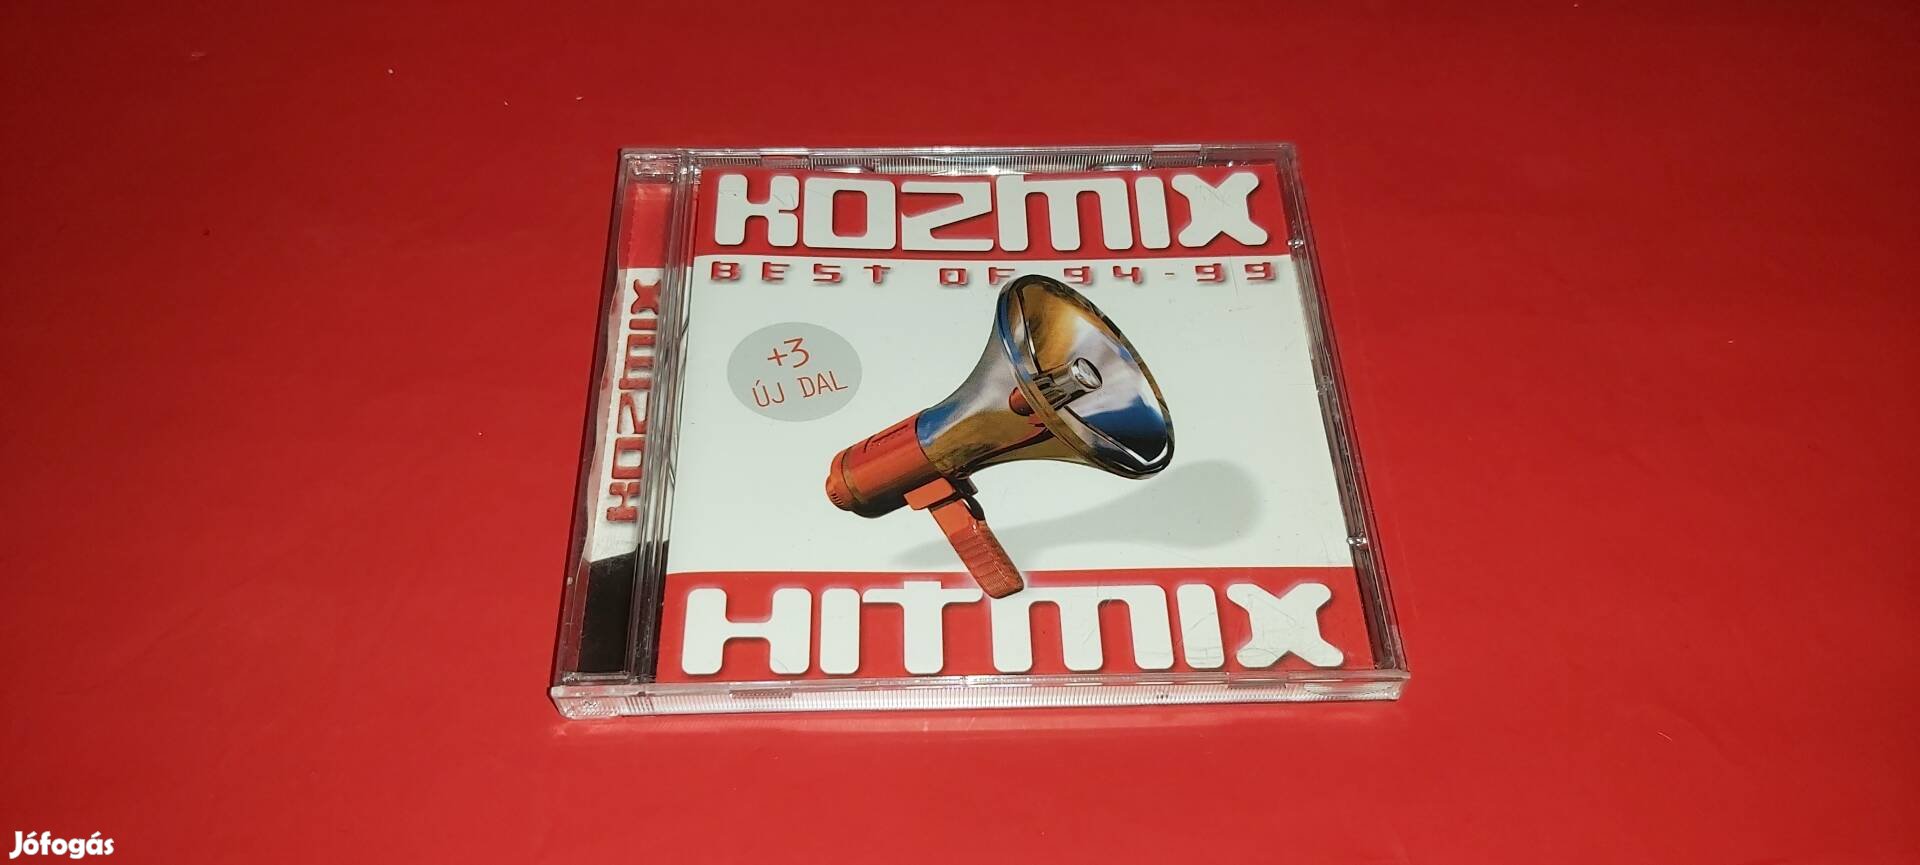 Kozmix Hitmix Best of 1994-1999 Cd